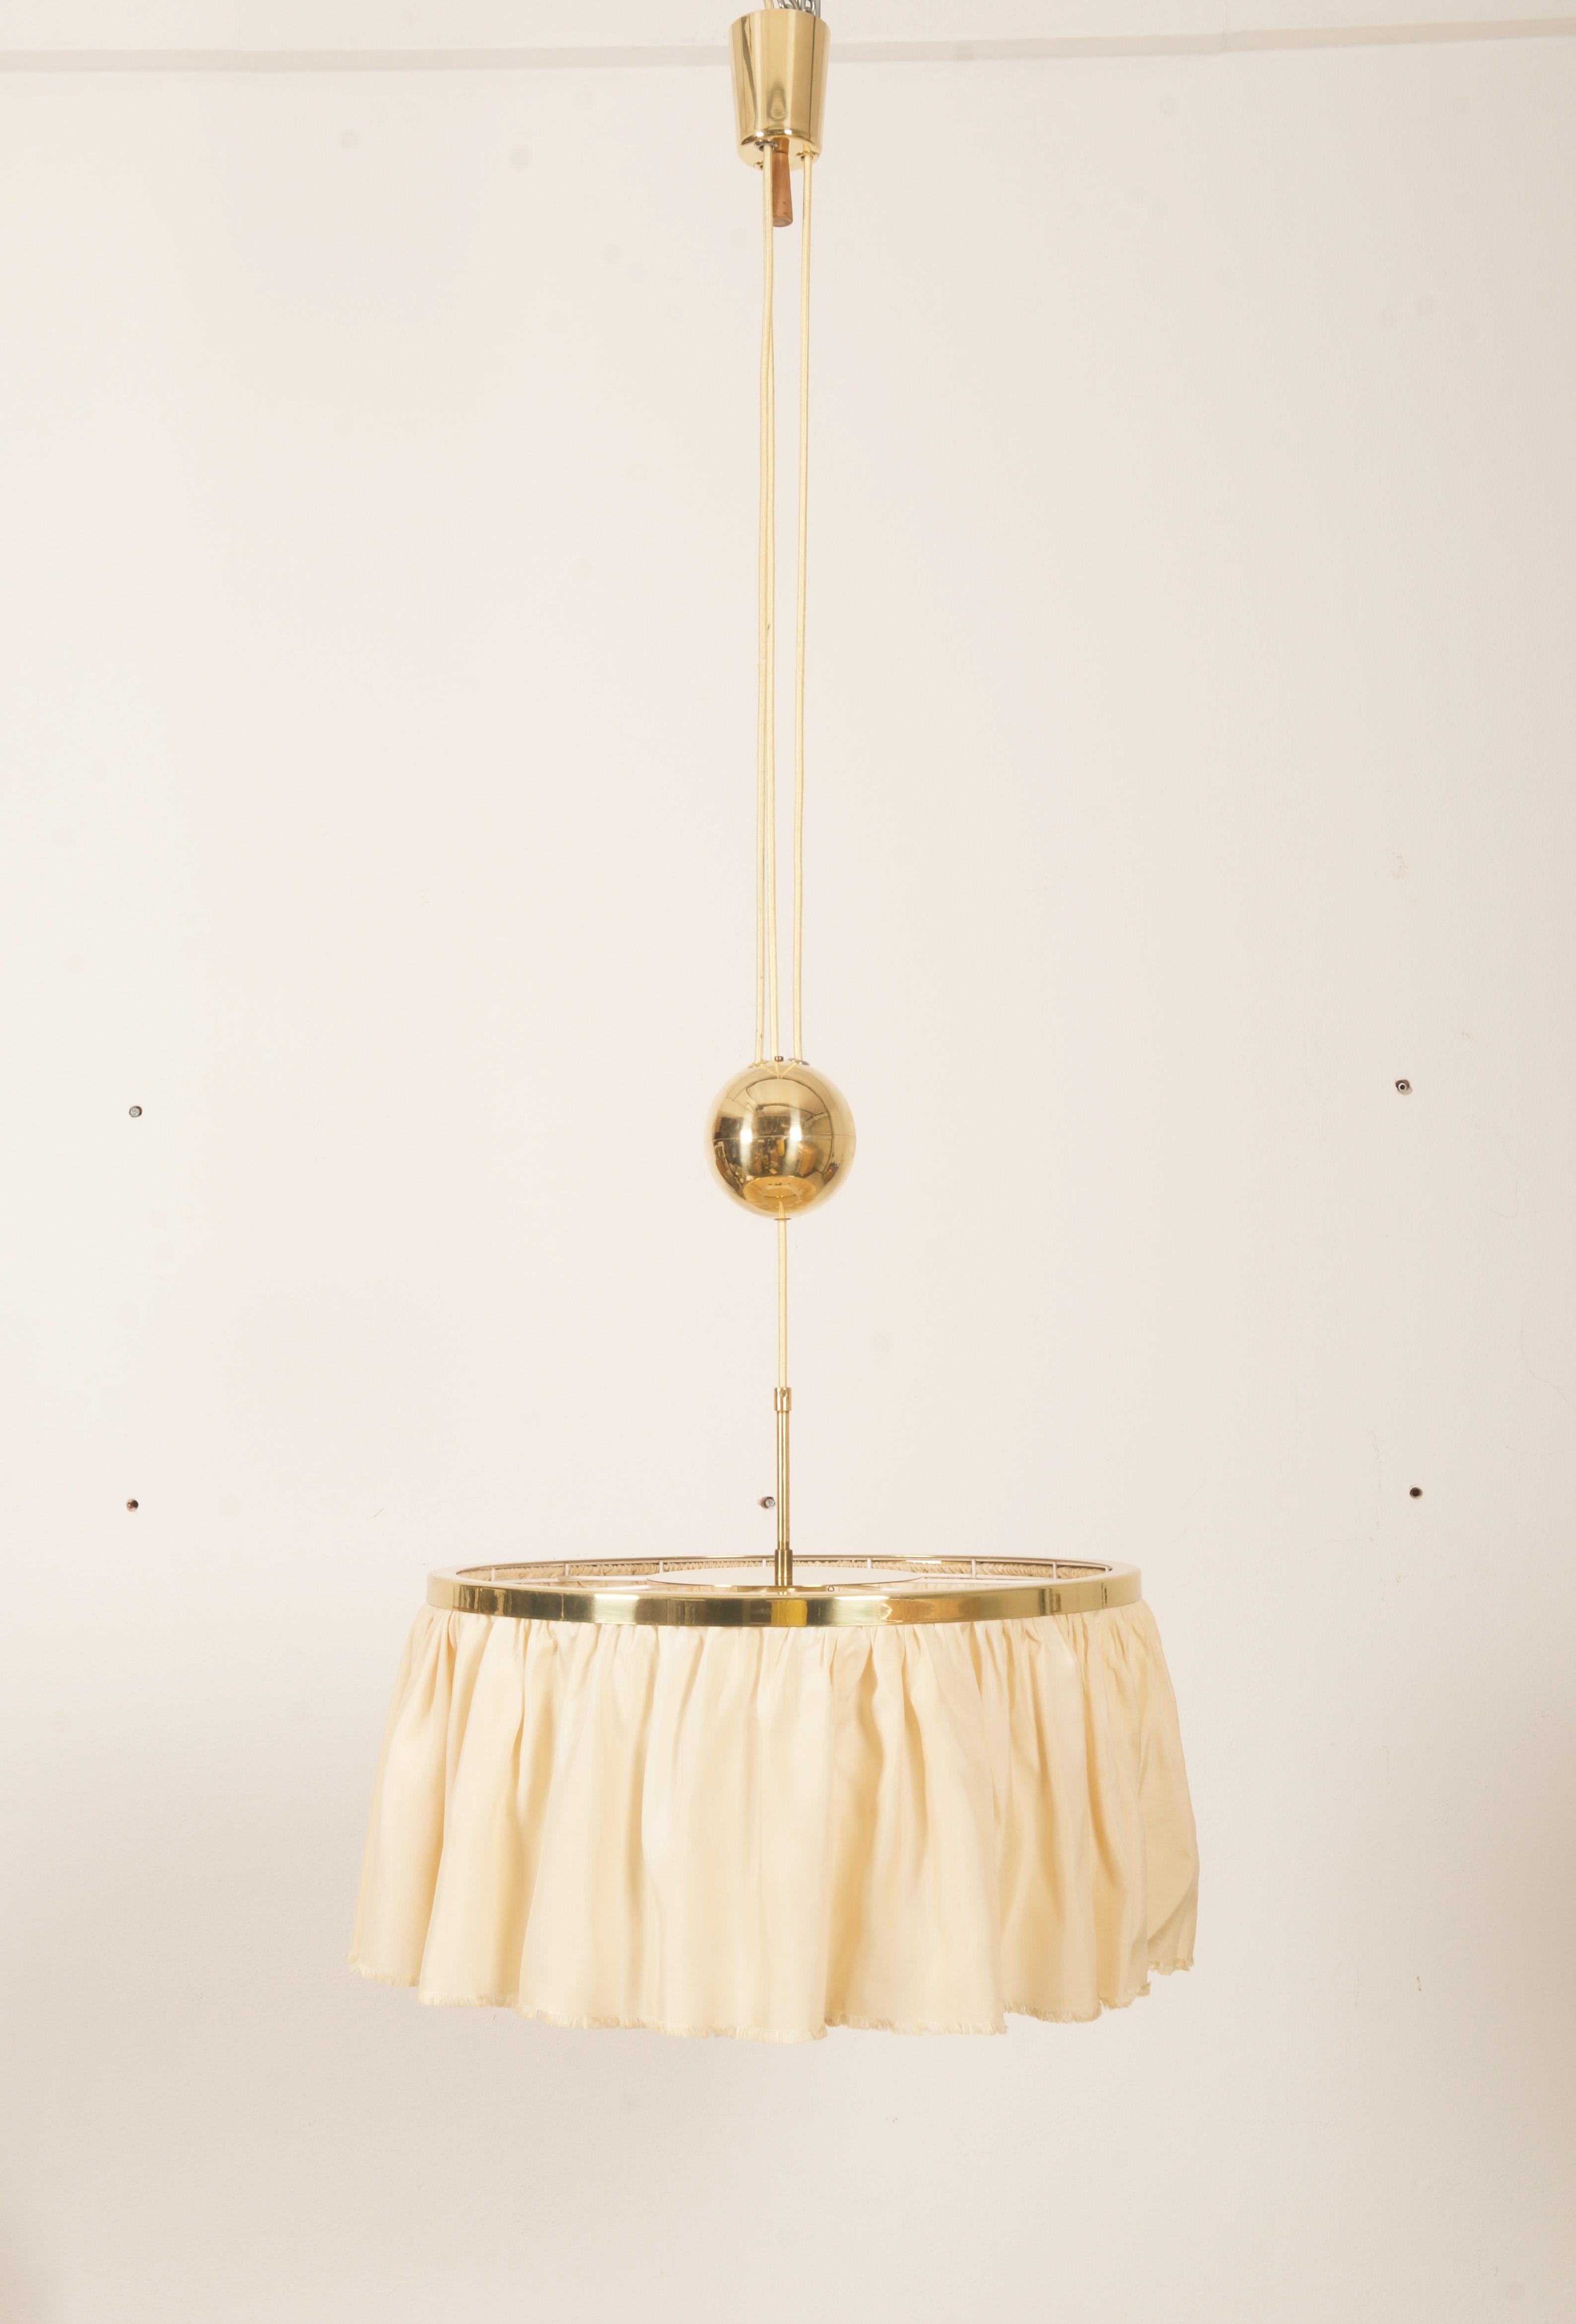 Counterweight Silk Pendant Light by J.T. Kalmar Designed by Adolf Loos 1